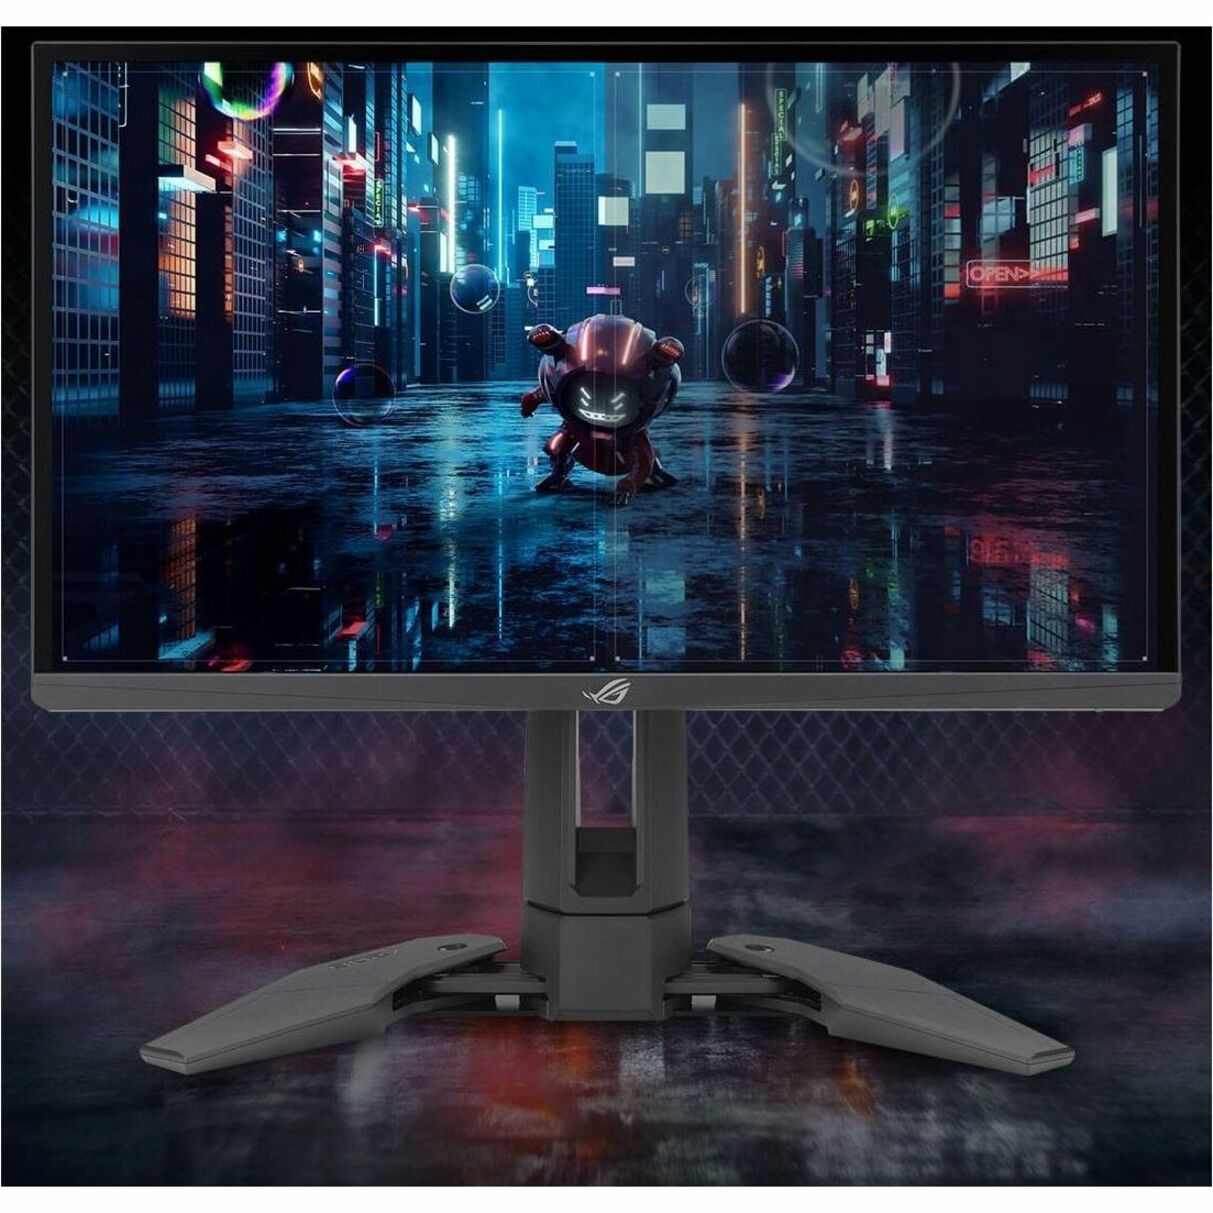 Asus ROG PG248QP Swift Pro 24" Gaming LCD Monitor, Full HD, G-Sync, 400 Nit Brightness, 125% sRGB Color Gamut, USB Hub